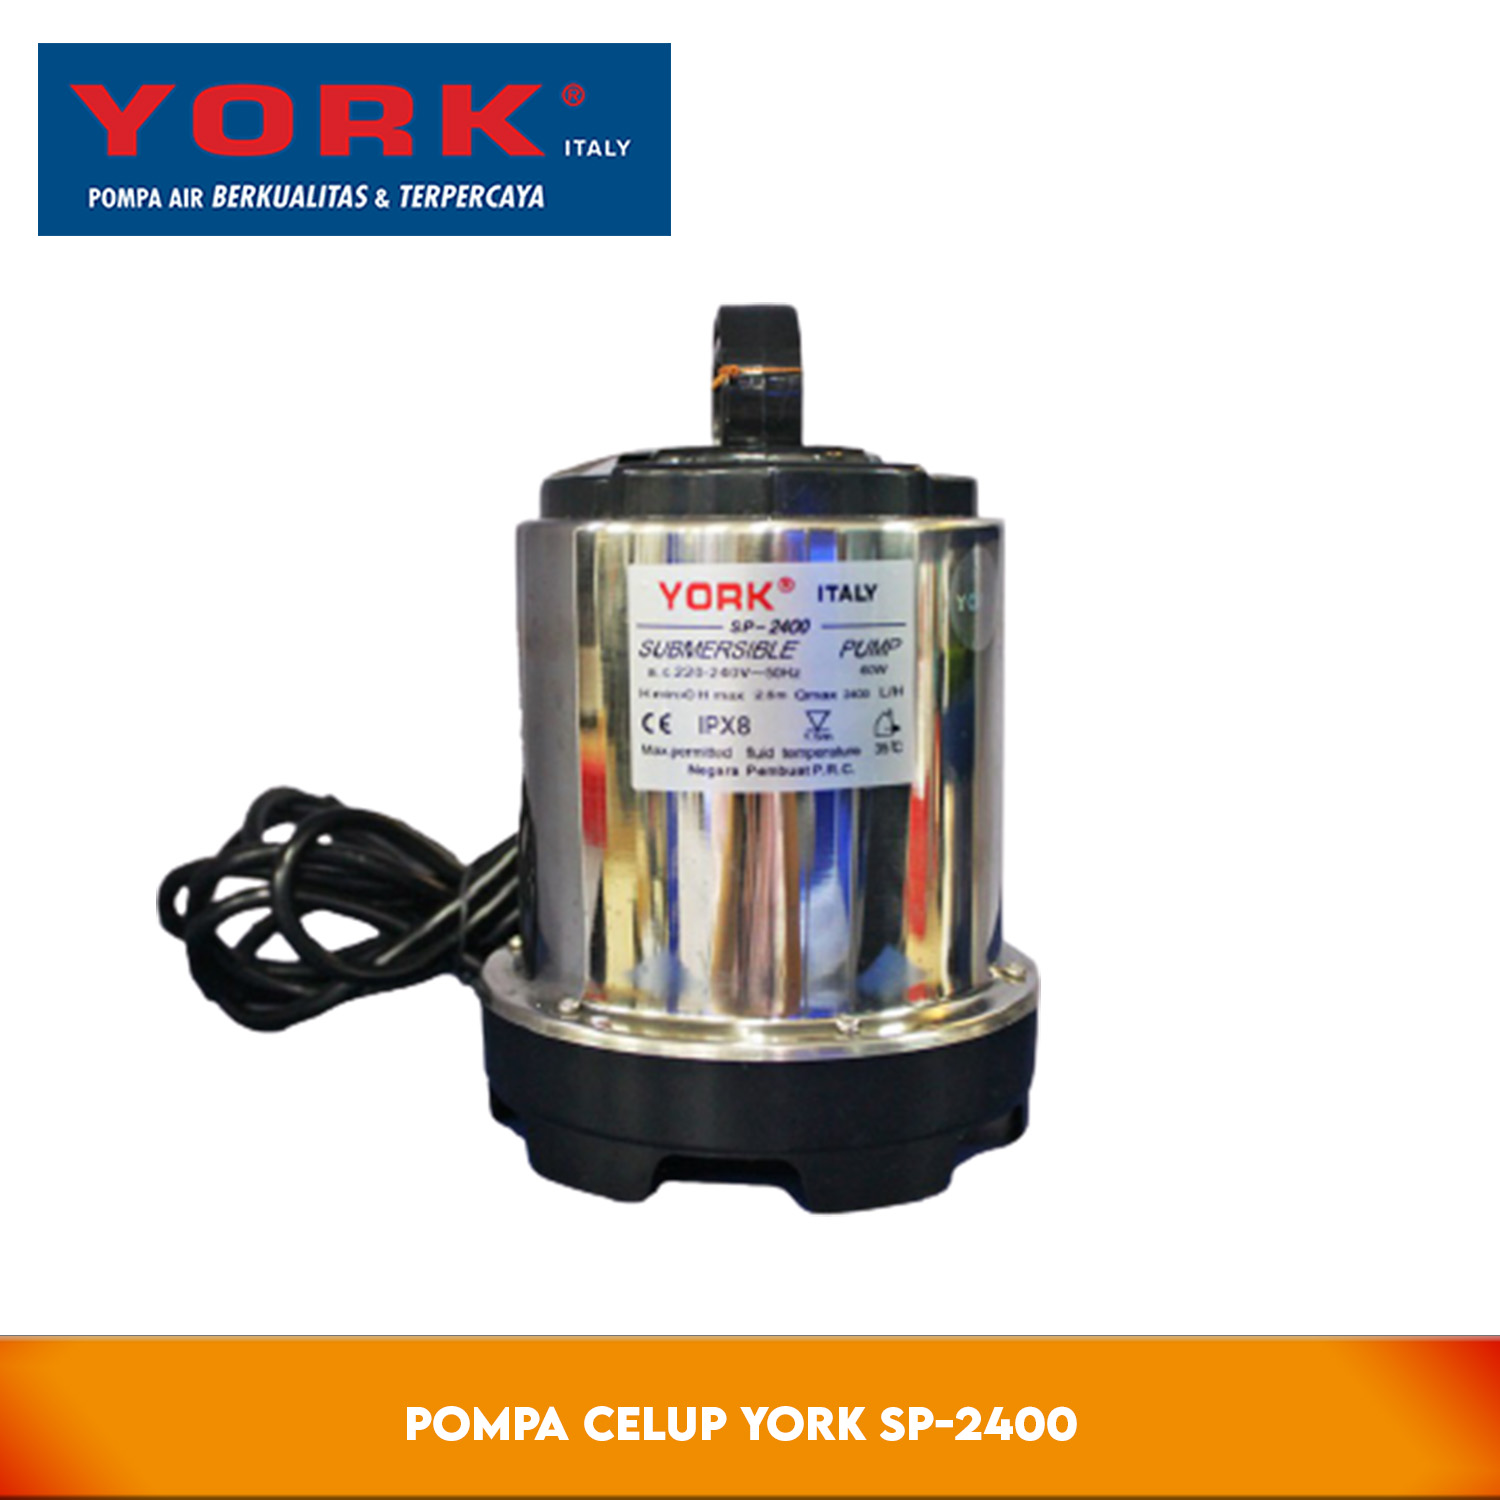 York SP-2400 - Pompa Celup